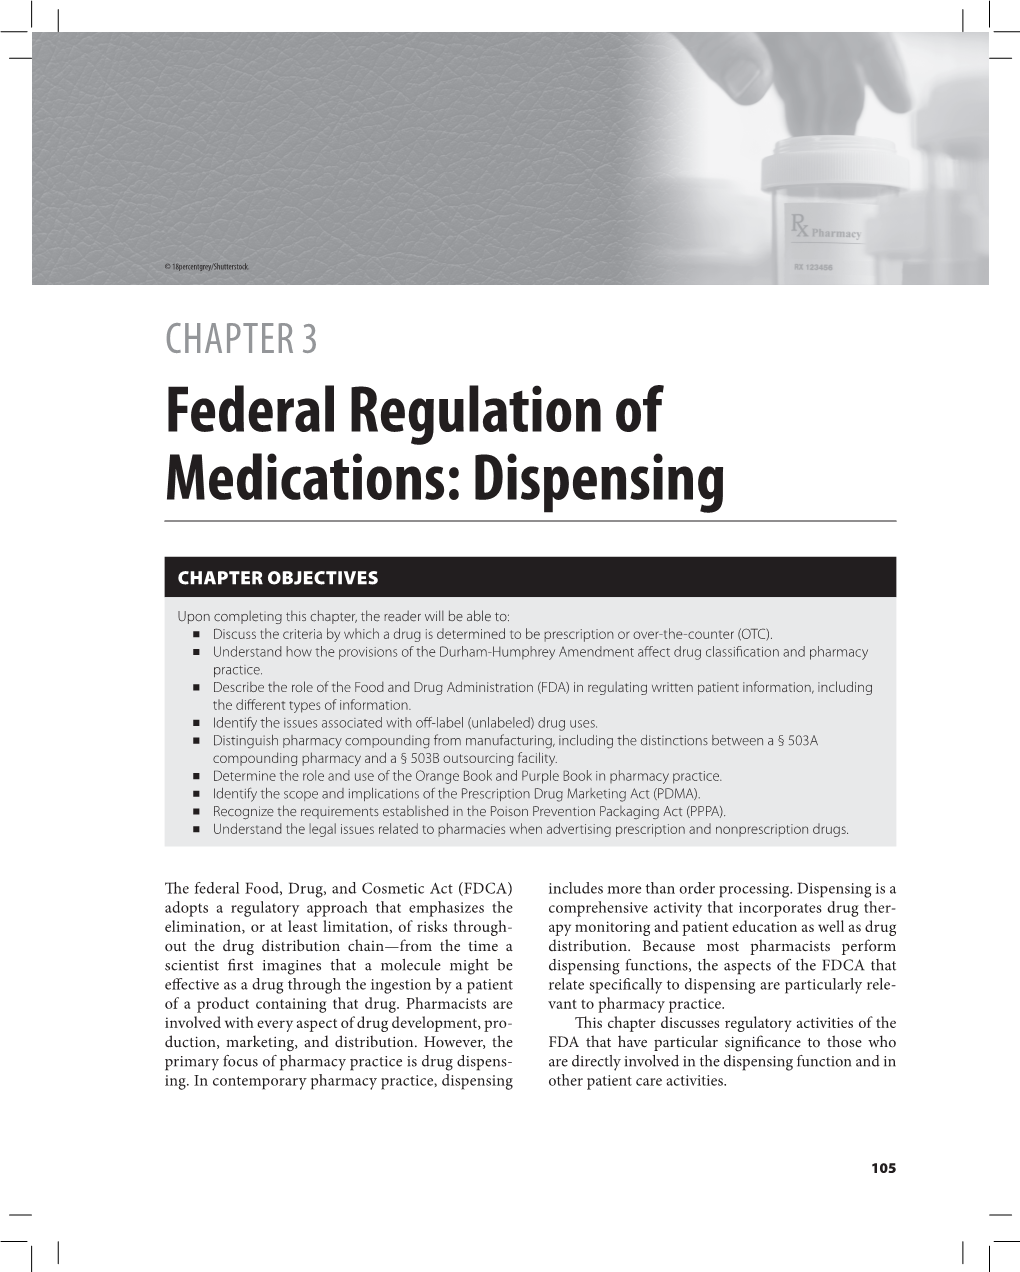 Federal Regulation of Medications: Dispensing